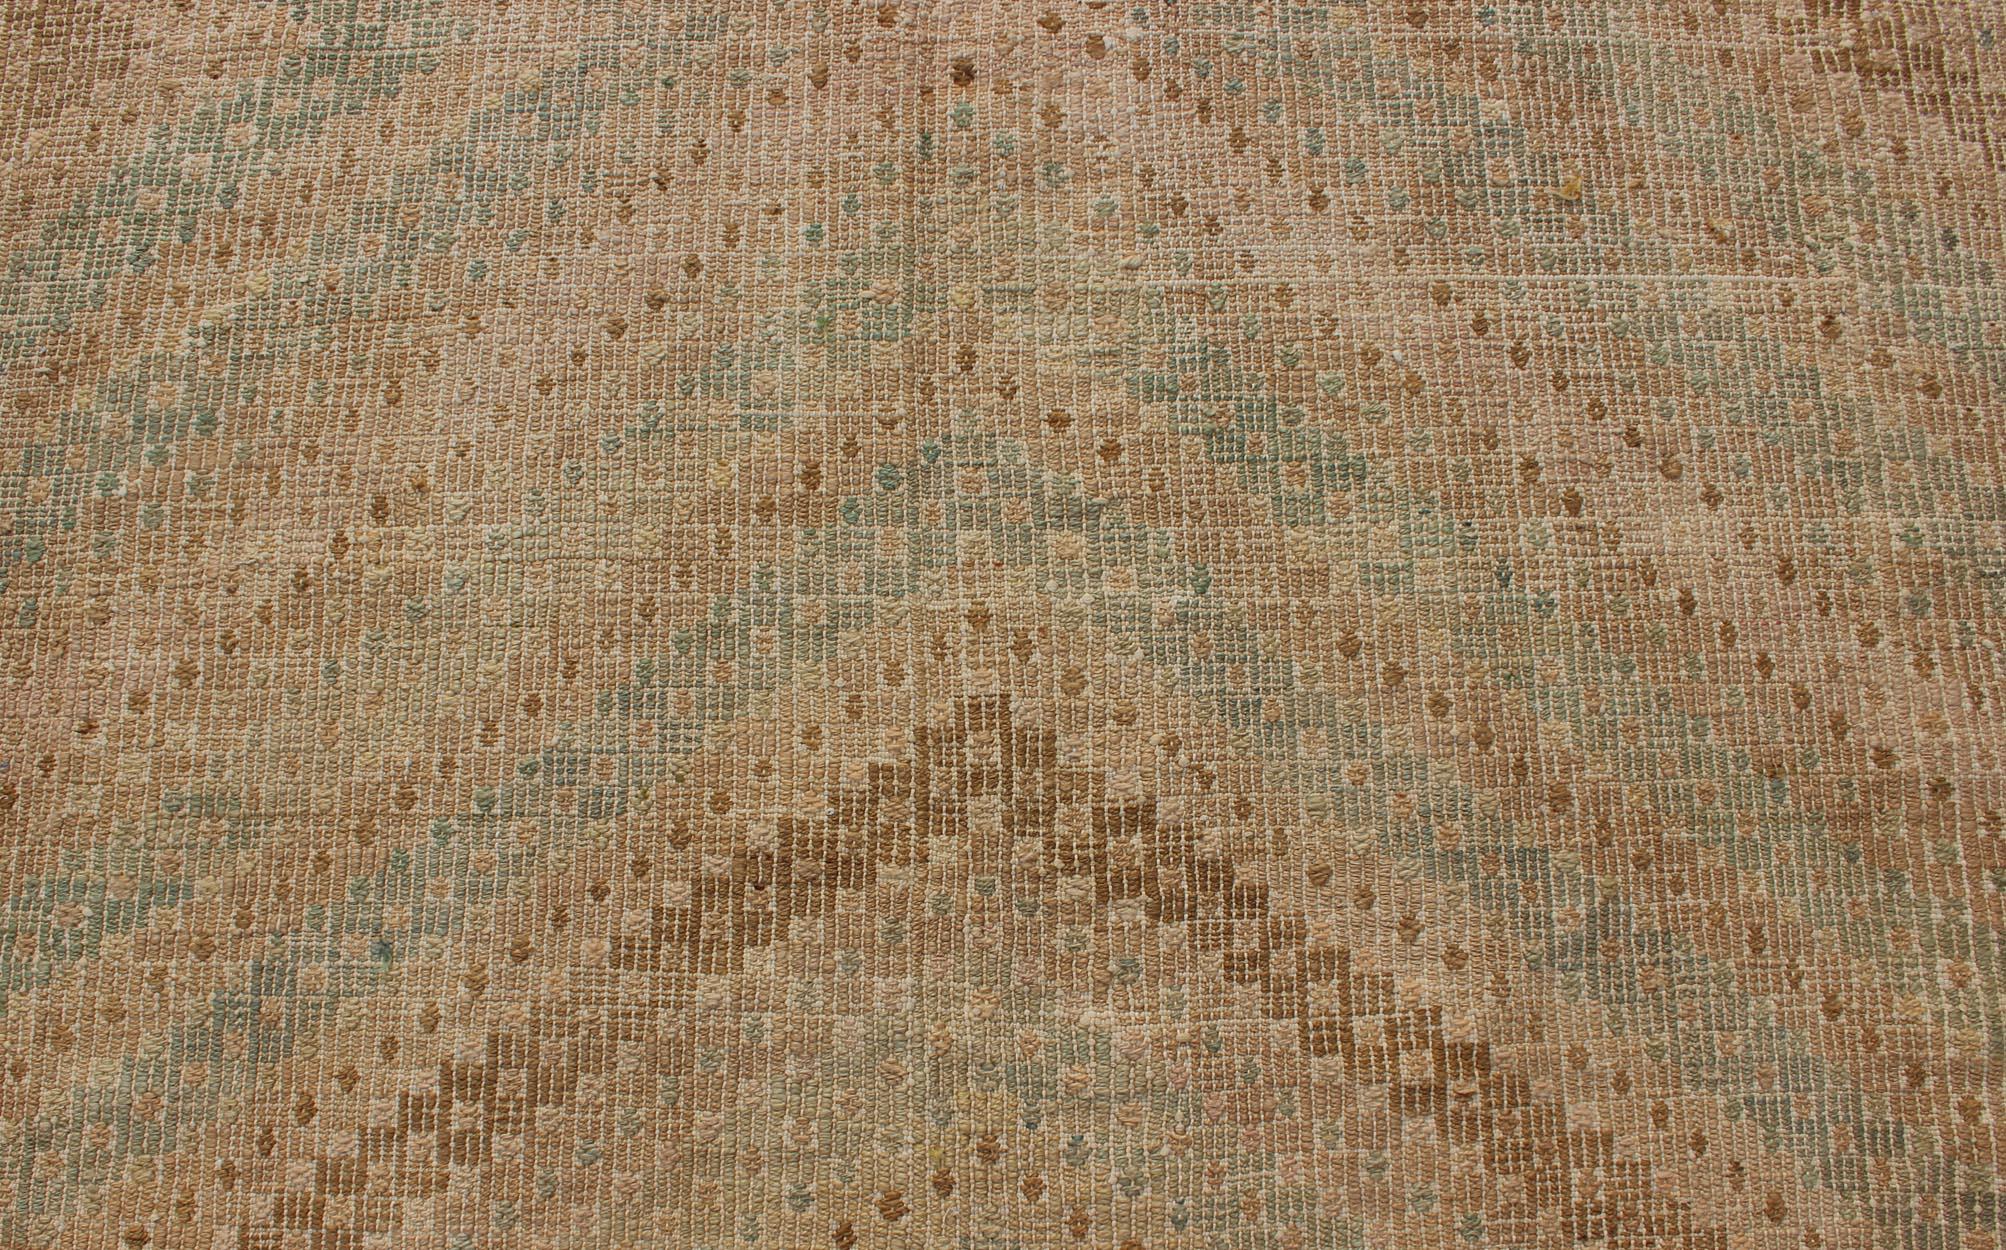 Wool Tan and Rust Colored Vintage Turkish Kilim Rug with Geometric Diamond Design For Sale